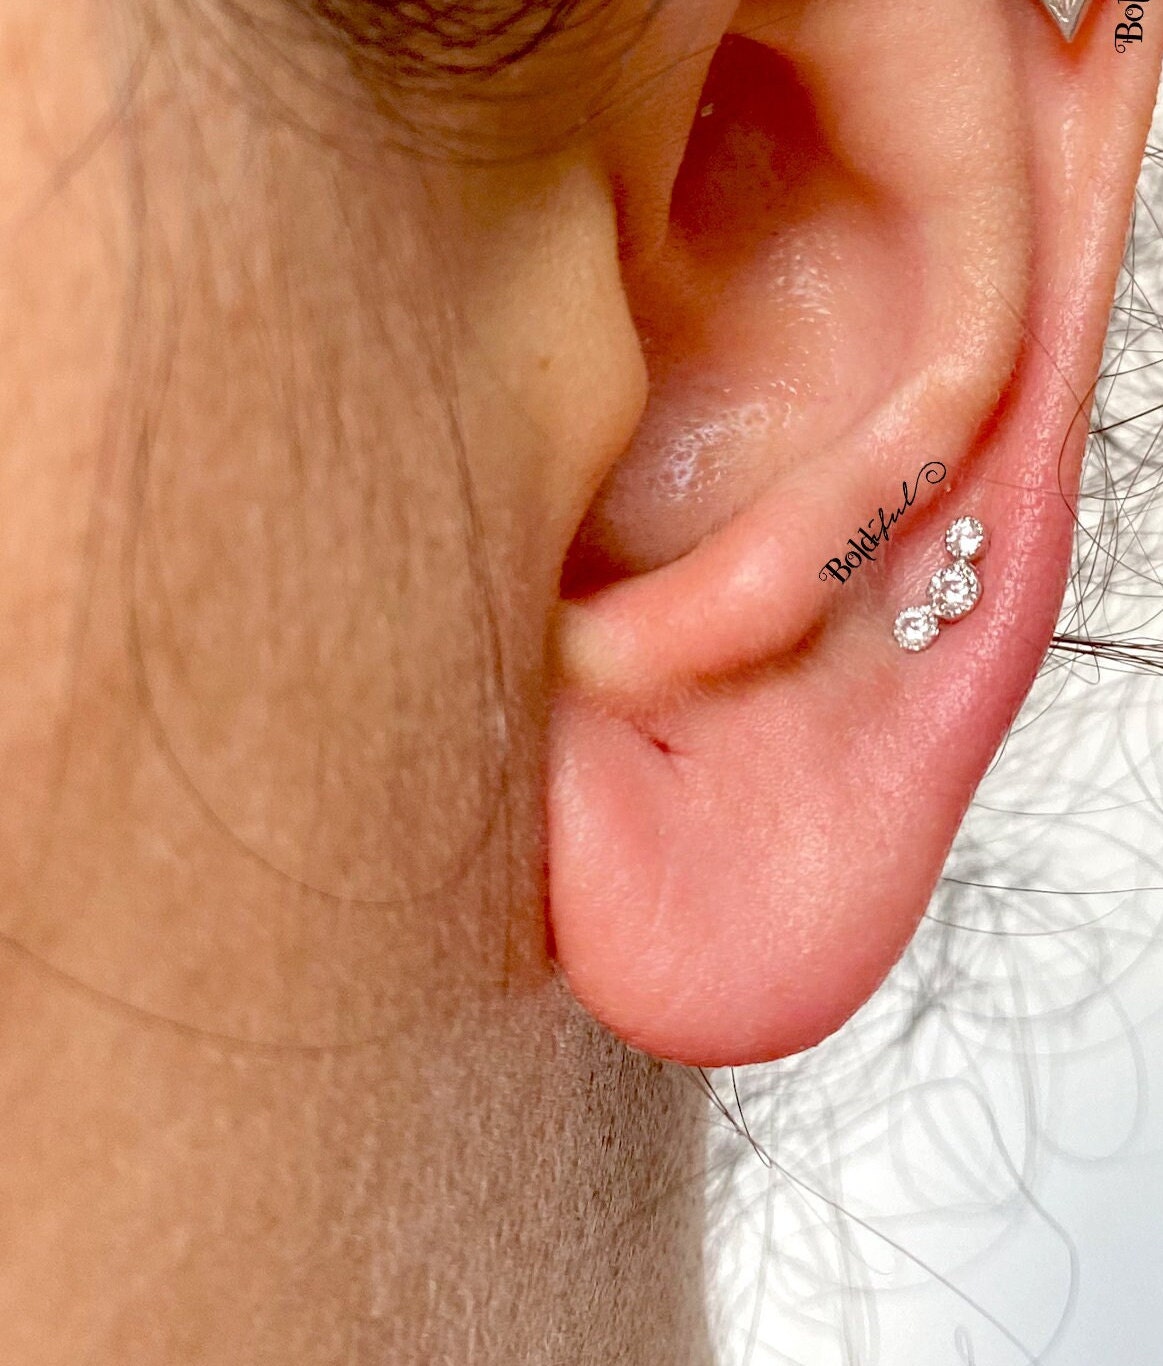 Buy Formissky 16G Cartilage Earrings Stud Helix Tragus Stud CZ Flower Upper  Lobe Piercing Jewelry Cute 316L Surgical Steel Screw Back at Amazon.in